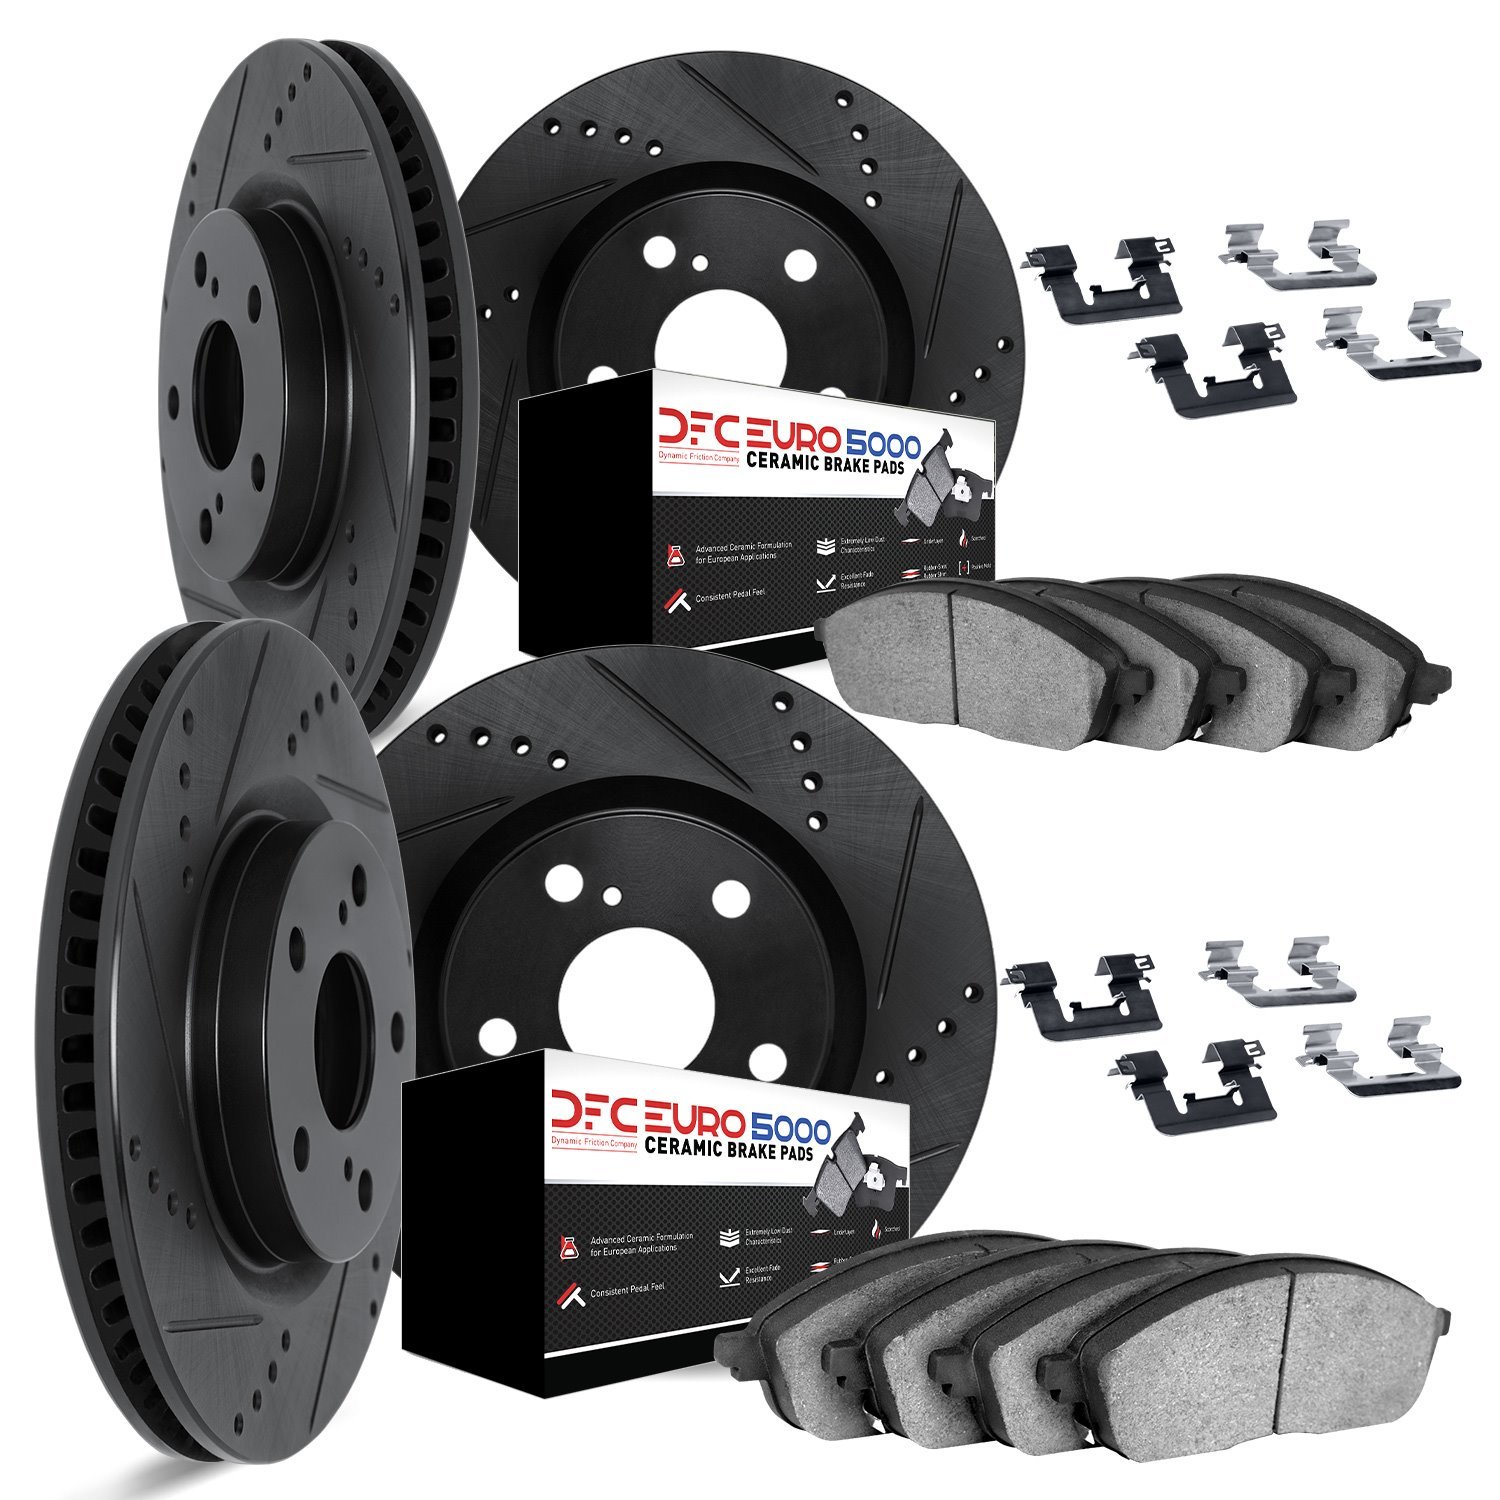 8614-27020 Drilled/Slotted Brake Rotors w/5000 Euro Ceramic Brake Pads Kit & Hardware [Black], 2007-2015 Volvo, Position: Front